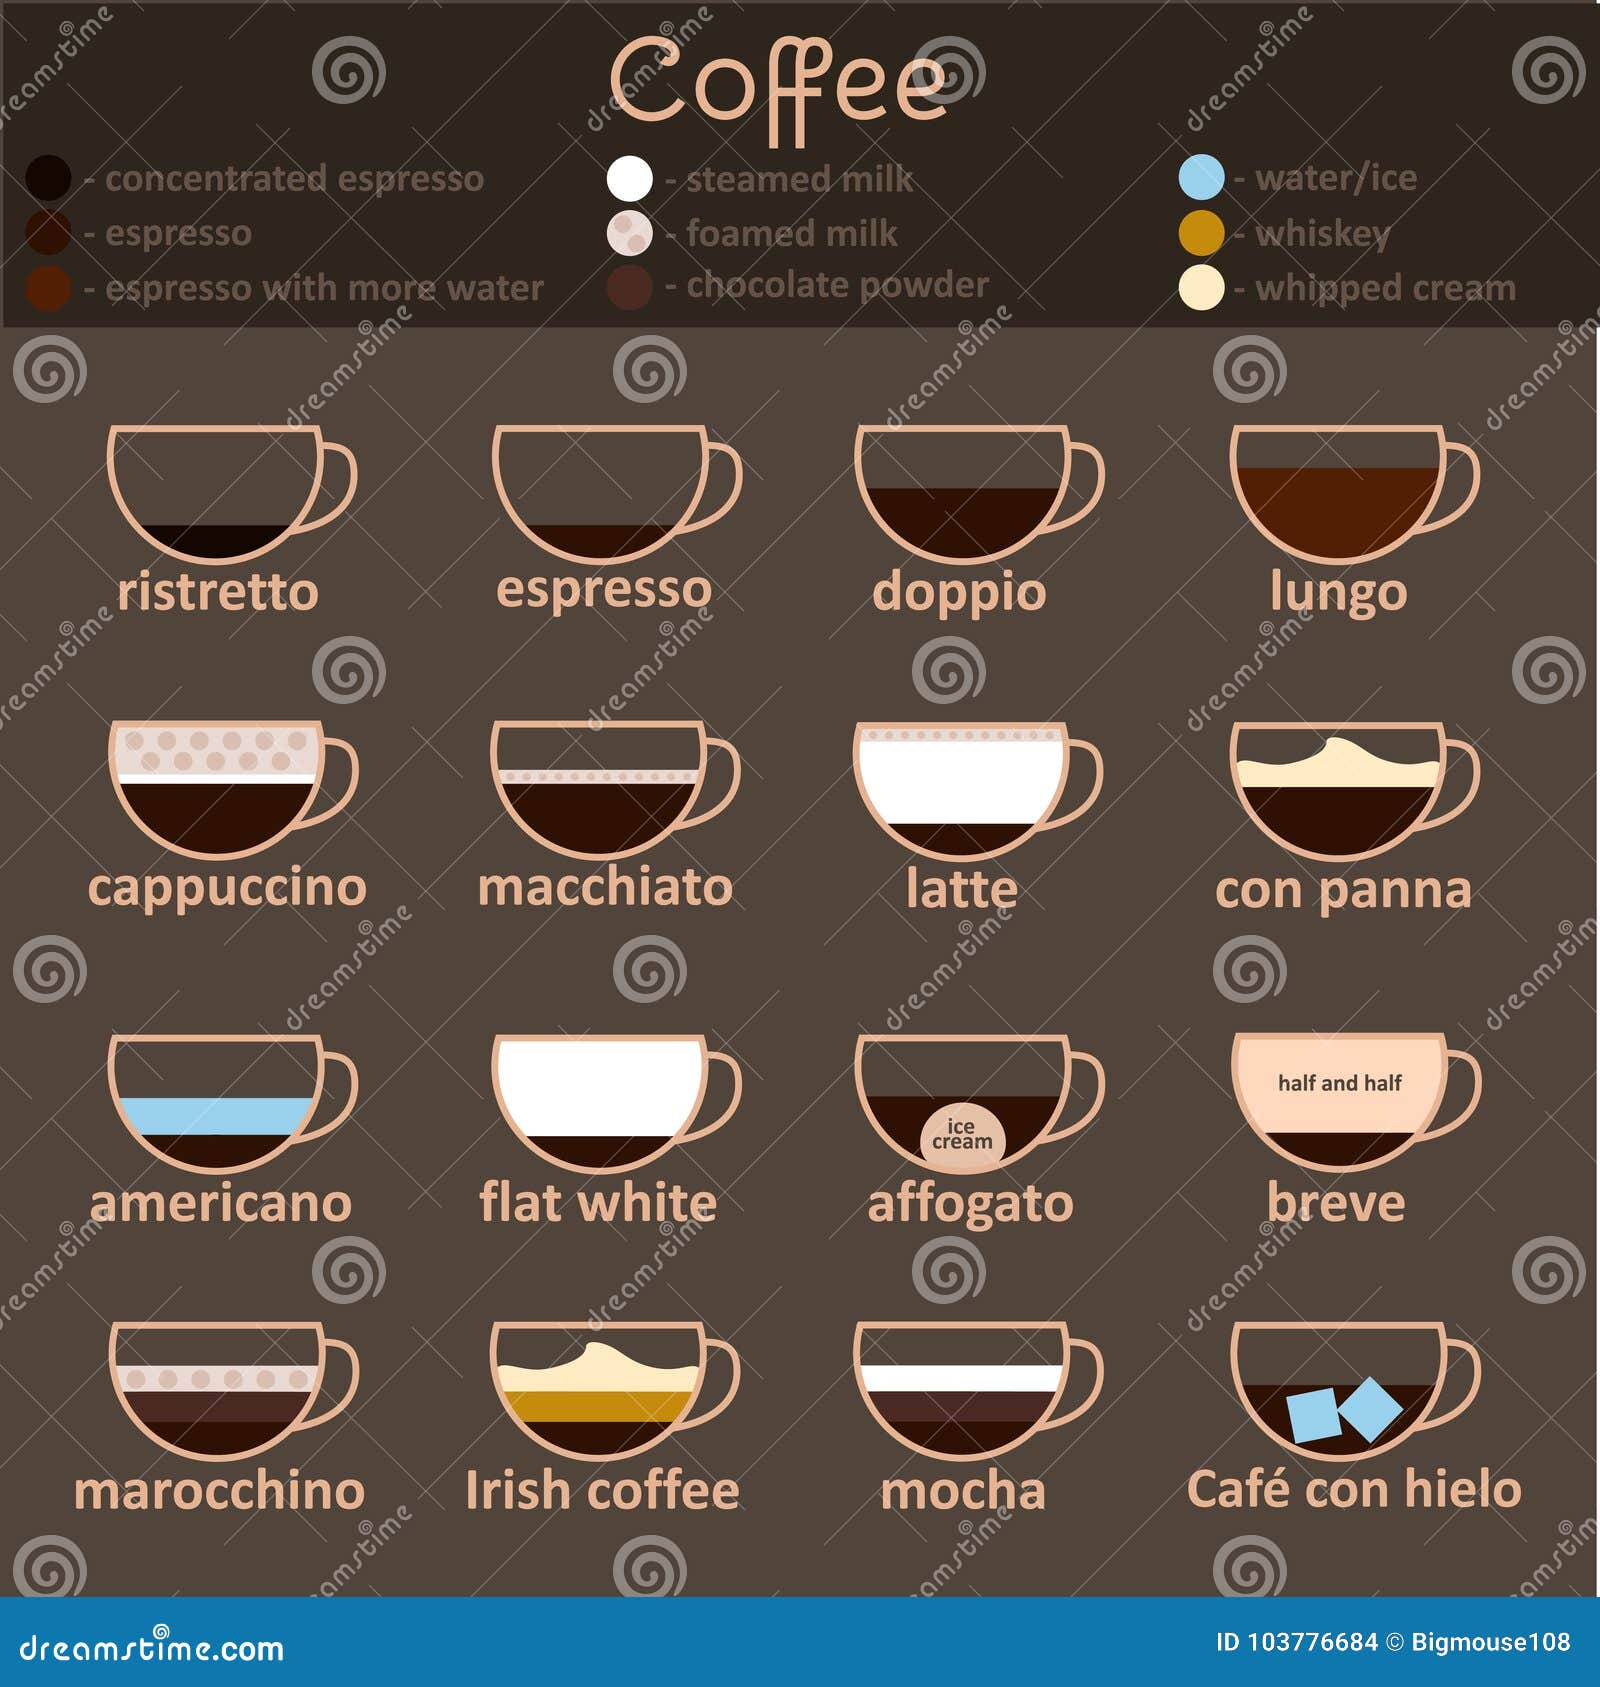 https://thumbs.dreamstime.com/z/espresso-guide-thin-line-icon-set-different-types-coffee-beverage-menu-bar-shop-restaurant-vector-illustration-103776684.jpg